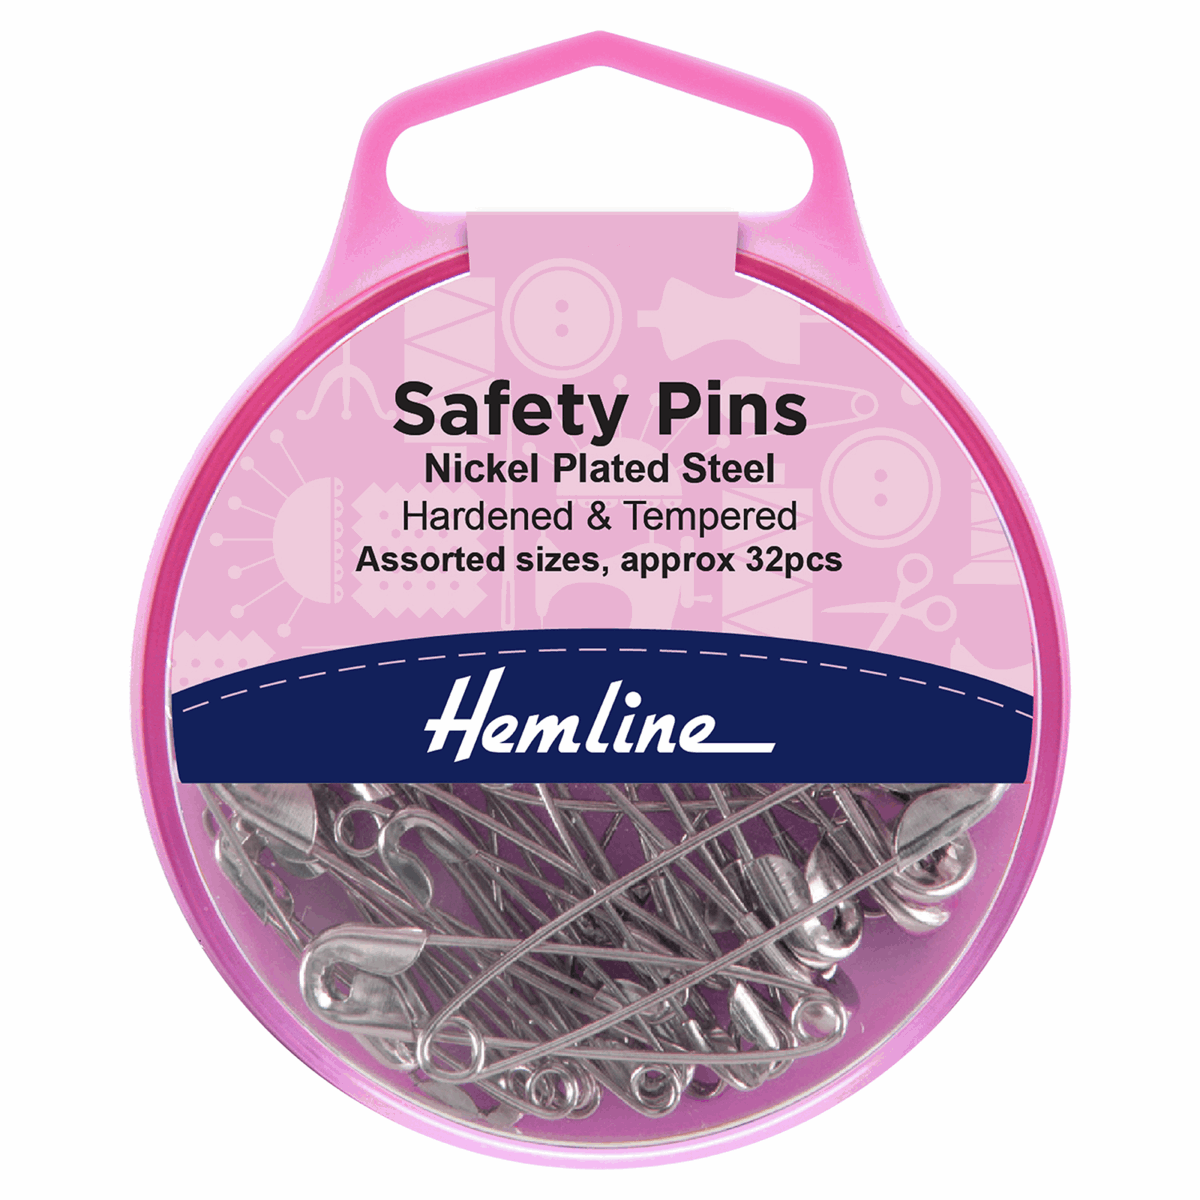 Hemline Safety Pins: Assorted Sizes - 32pcs